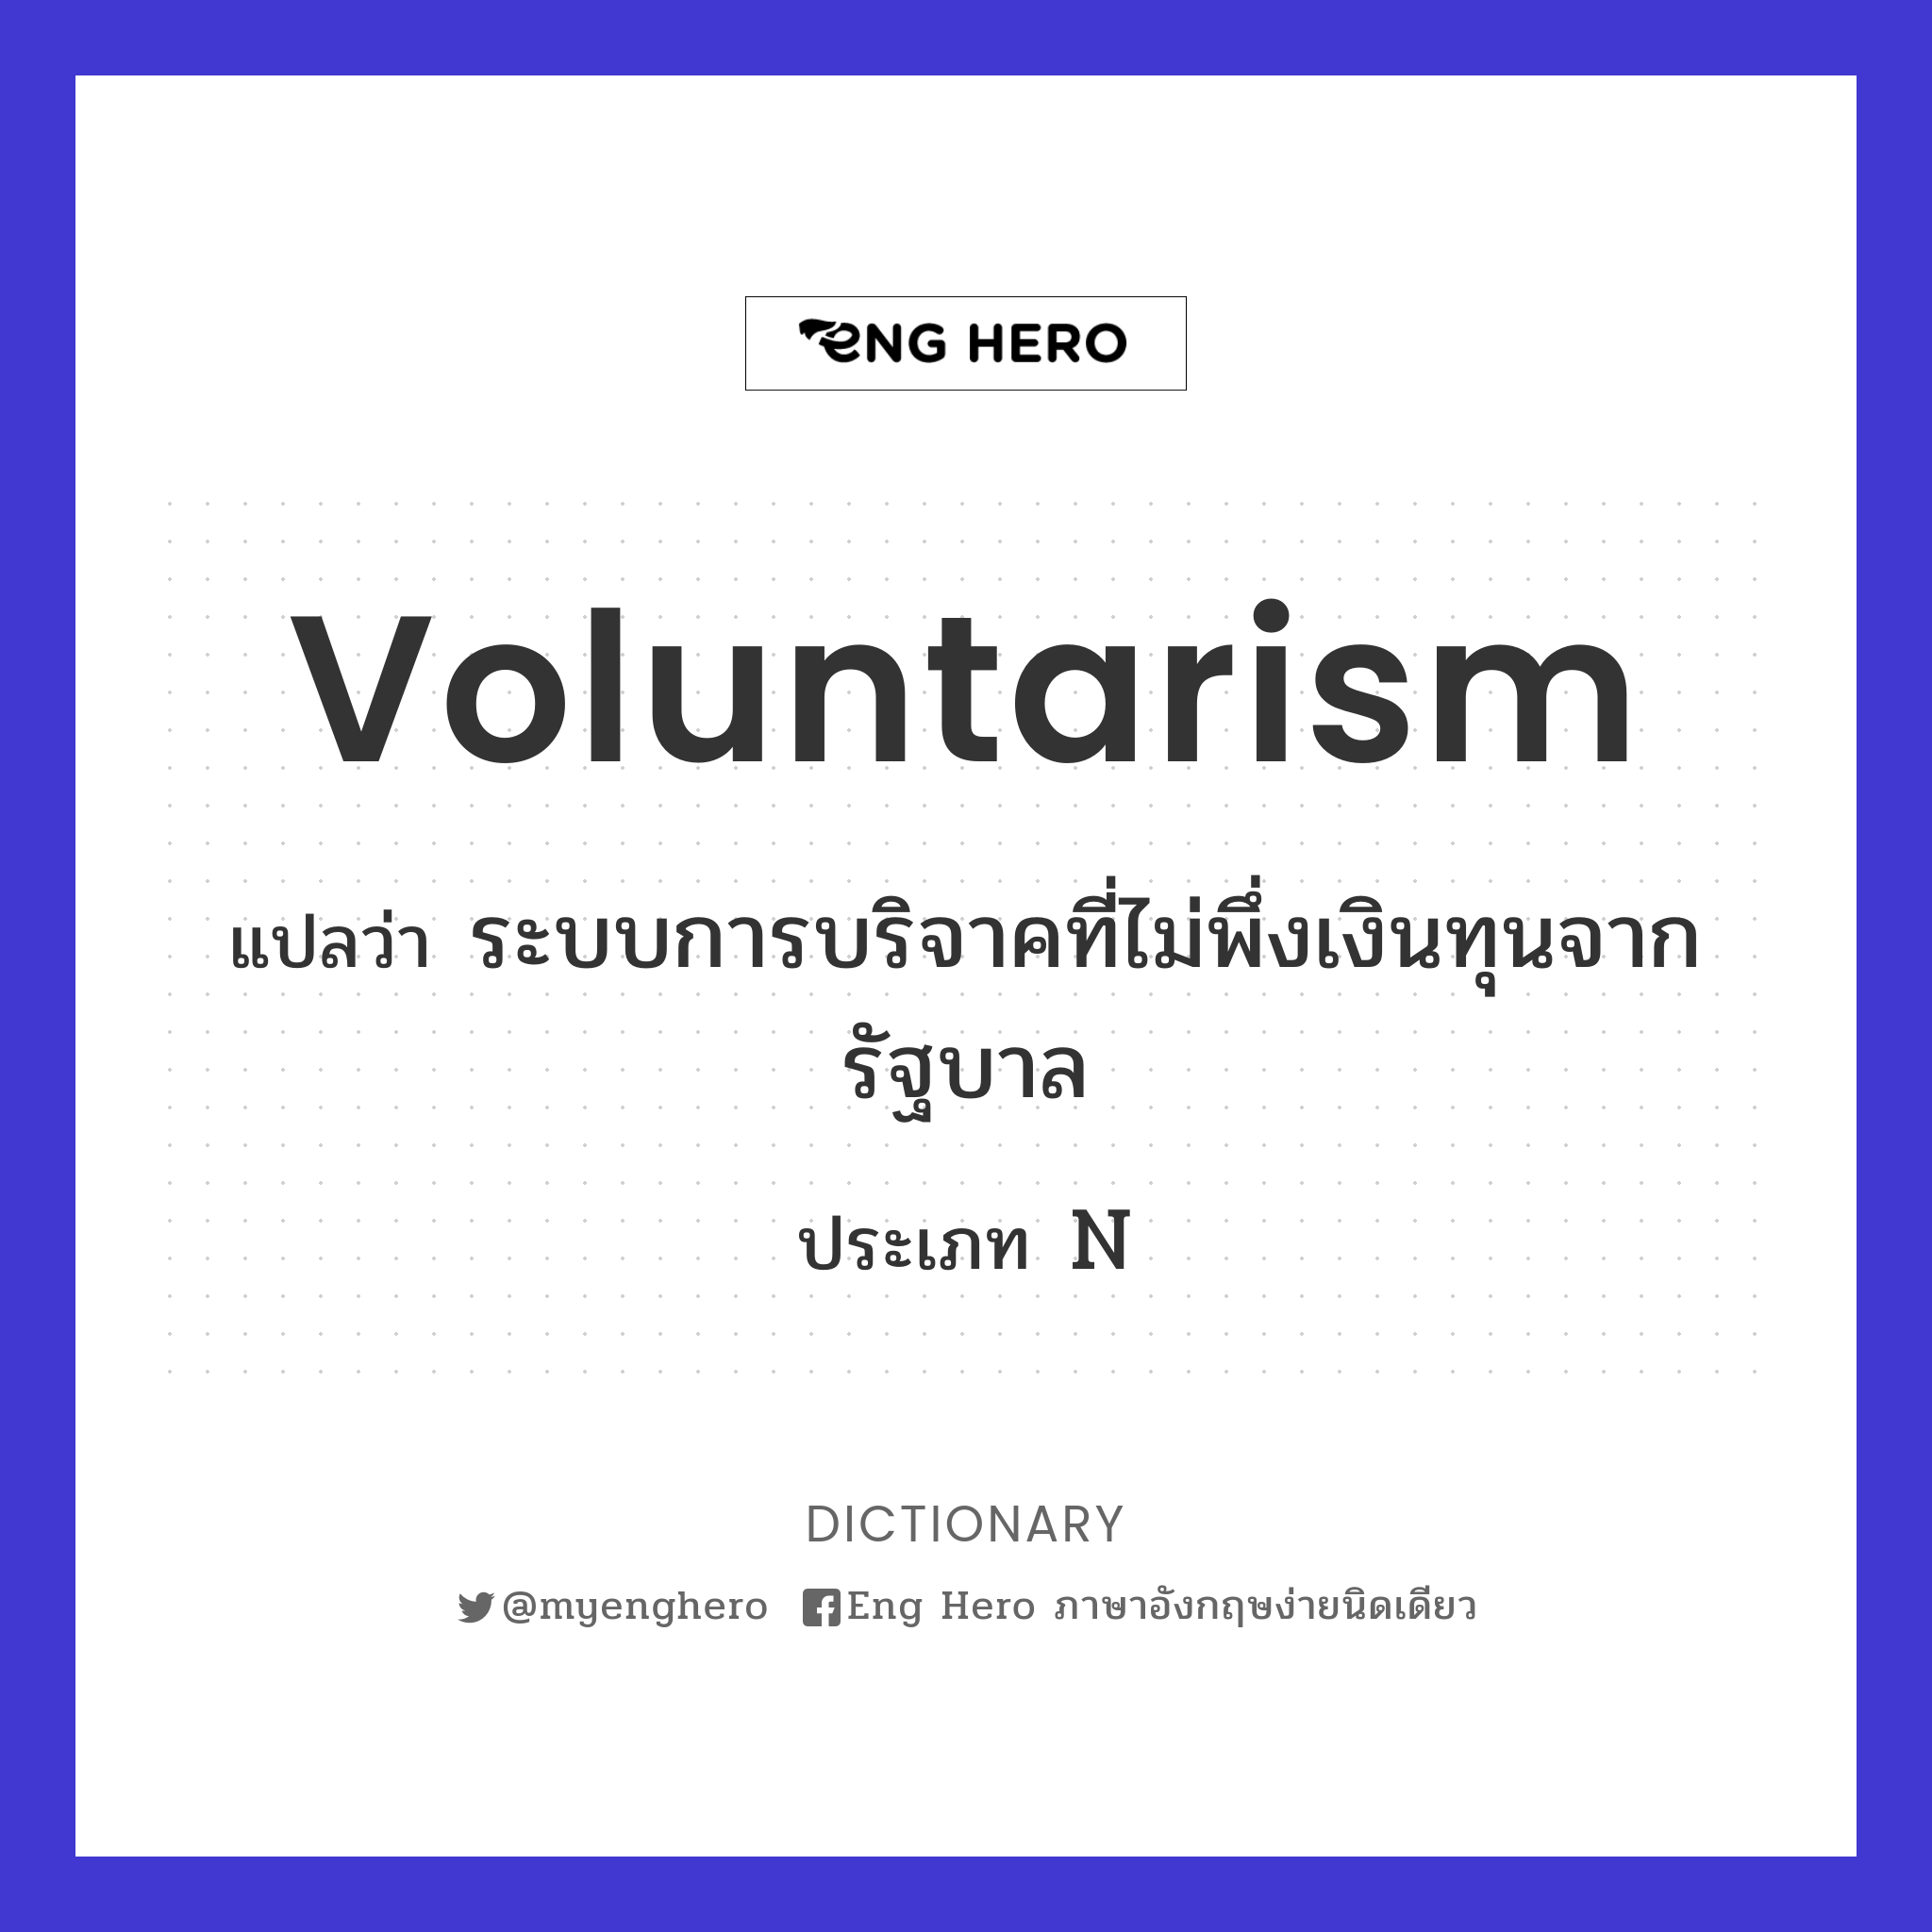 voluntarism